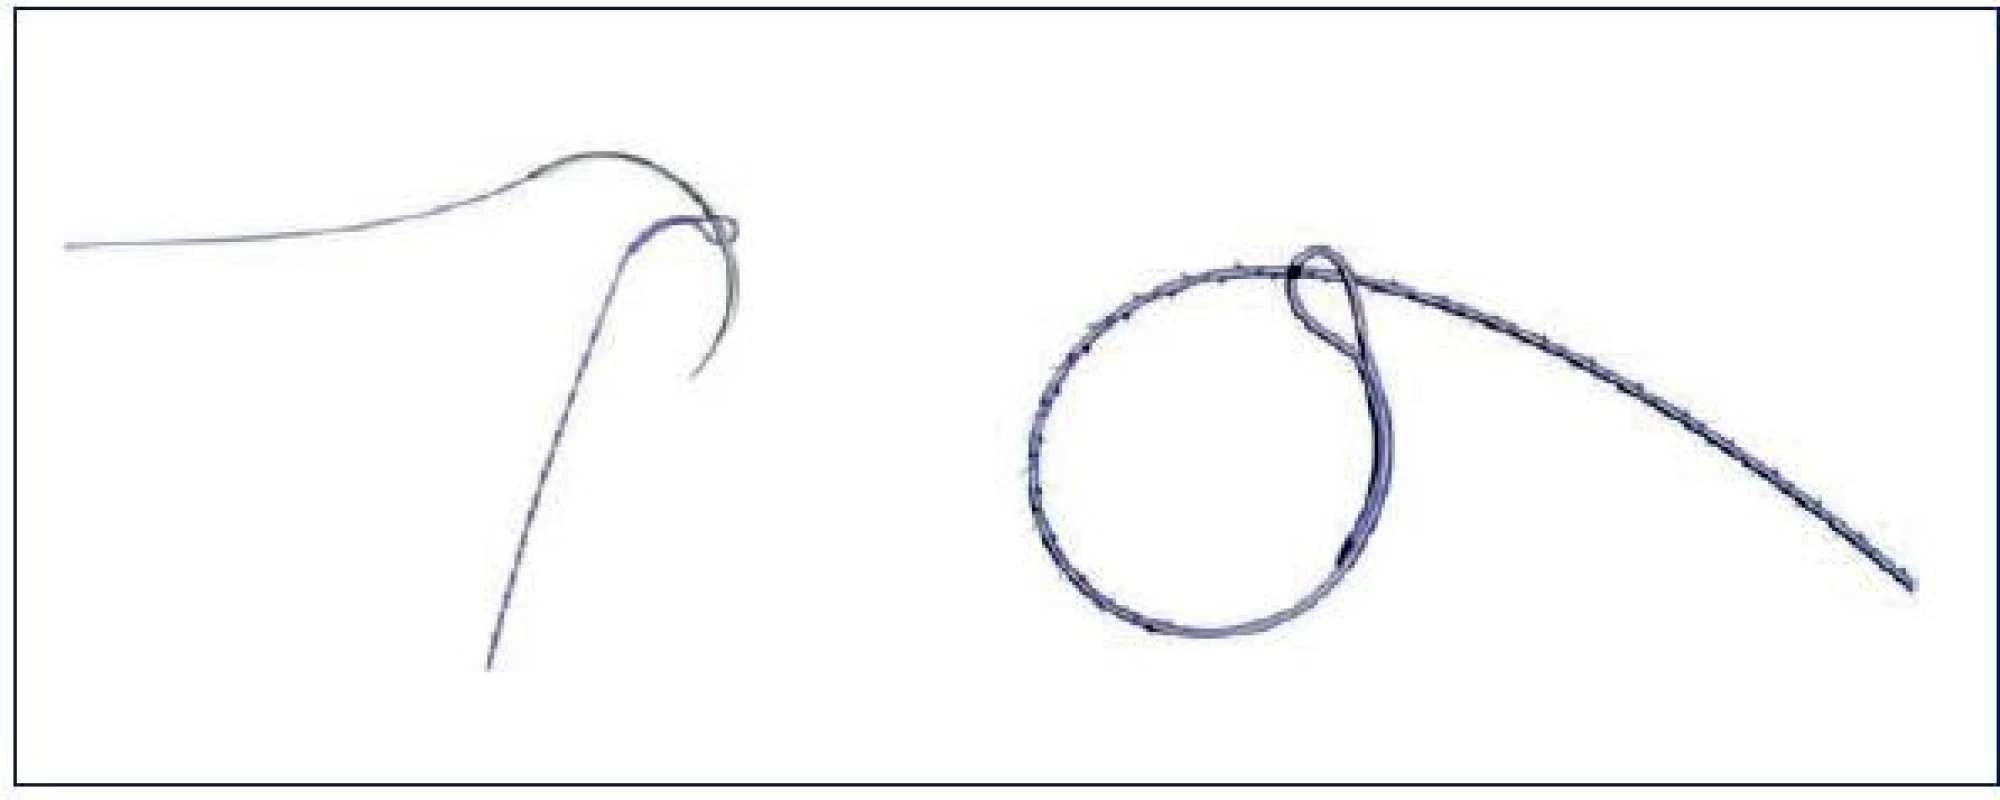 Protažení jehly koncovým okem
Převzato: Greenberg JA. The use of barbed sutures in obstetrics and gynecology. Rev Obstet Gynecol 2010; 3(3): 82–91.
Fig. 2. The stretching a needle the eye at the end of a stitch
Source: Greenberg JA. The use of barbed sutures in obstetrics and gynecology. Rev Obstet Gynecol 2010; 3(3): 82–91.